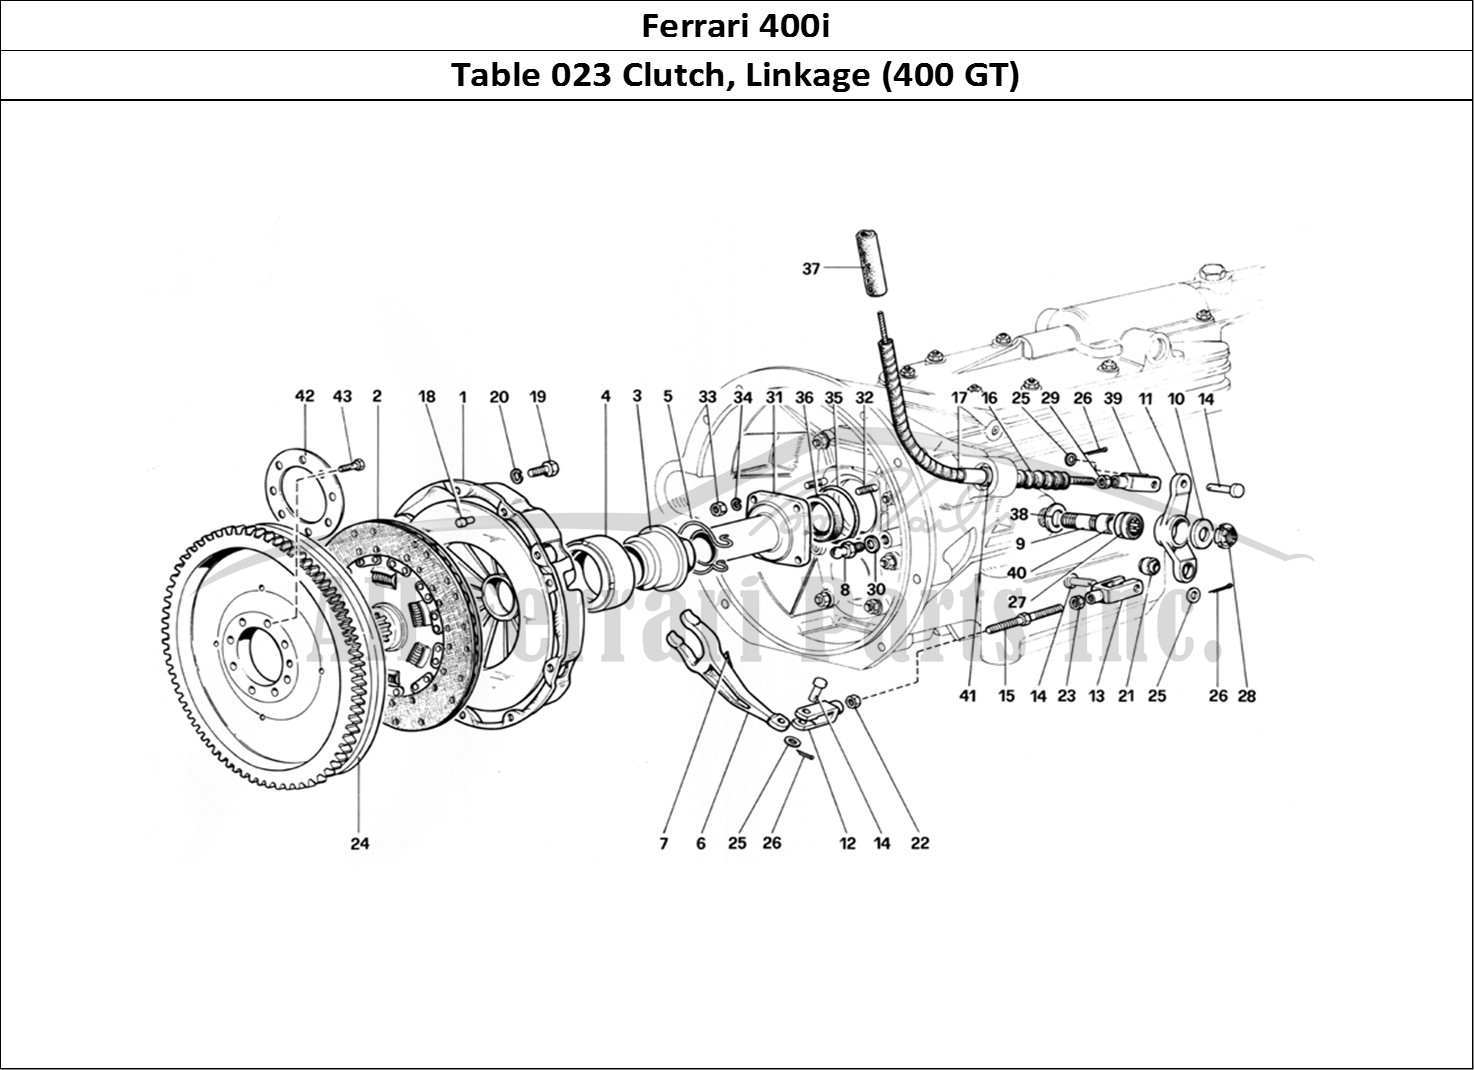 Ferrari Parts Ferrari 400i (1983 Mechanical) Page 023 Clutch System and Control